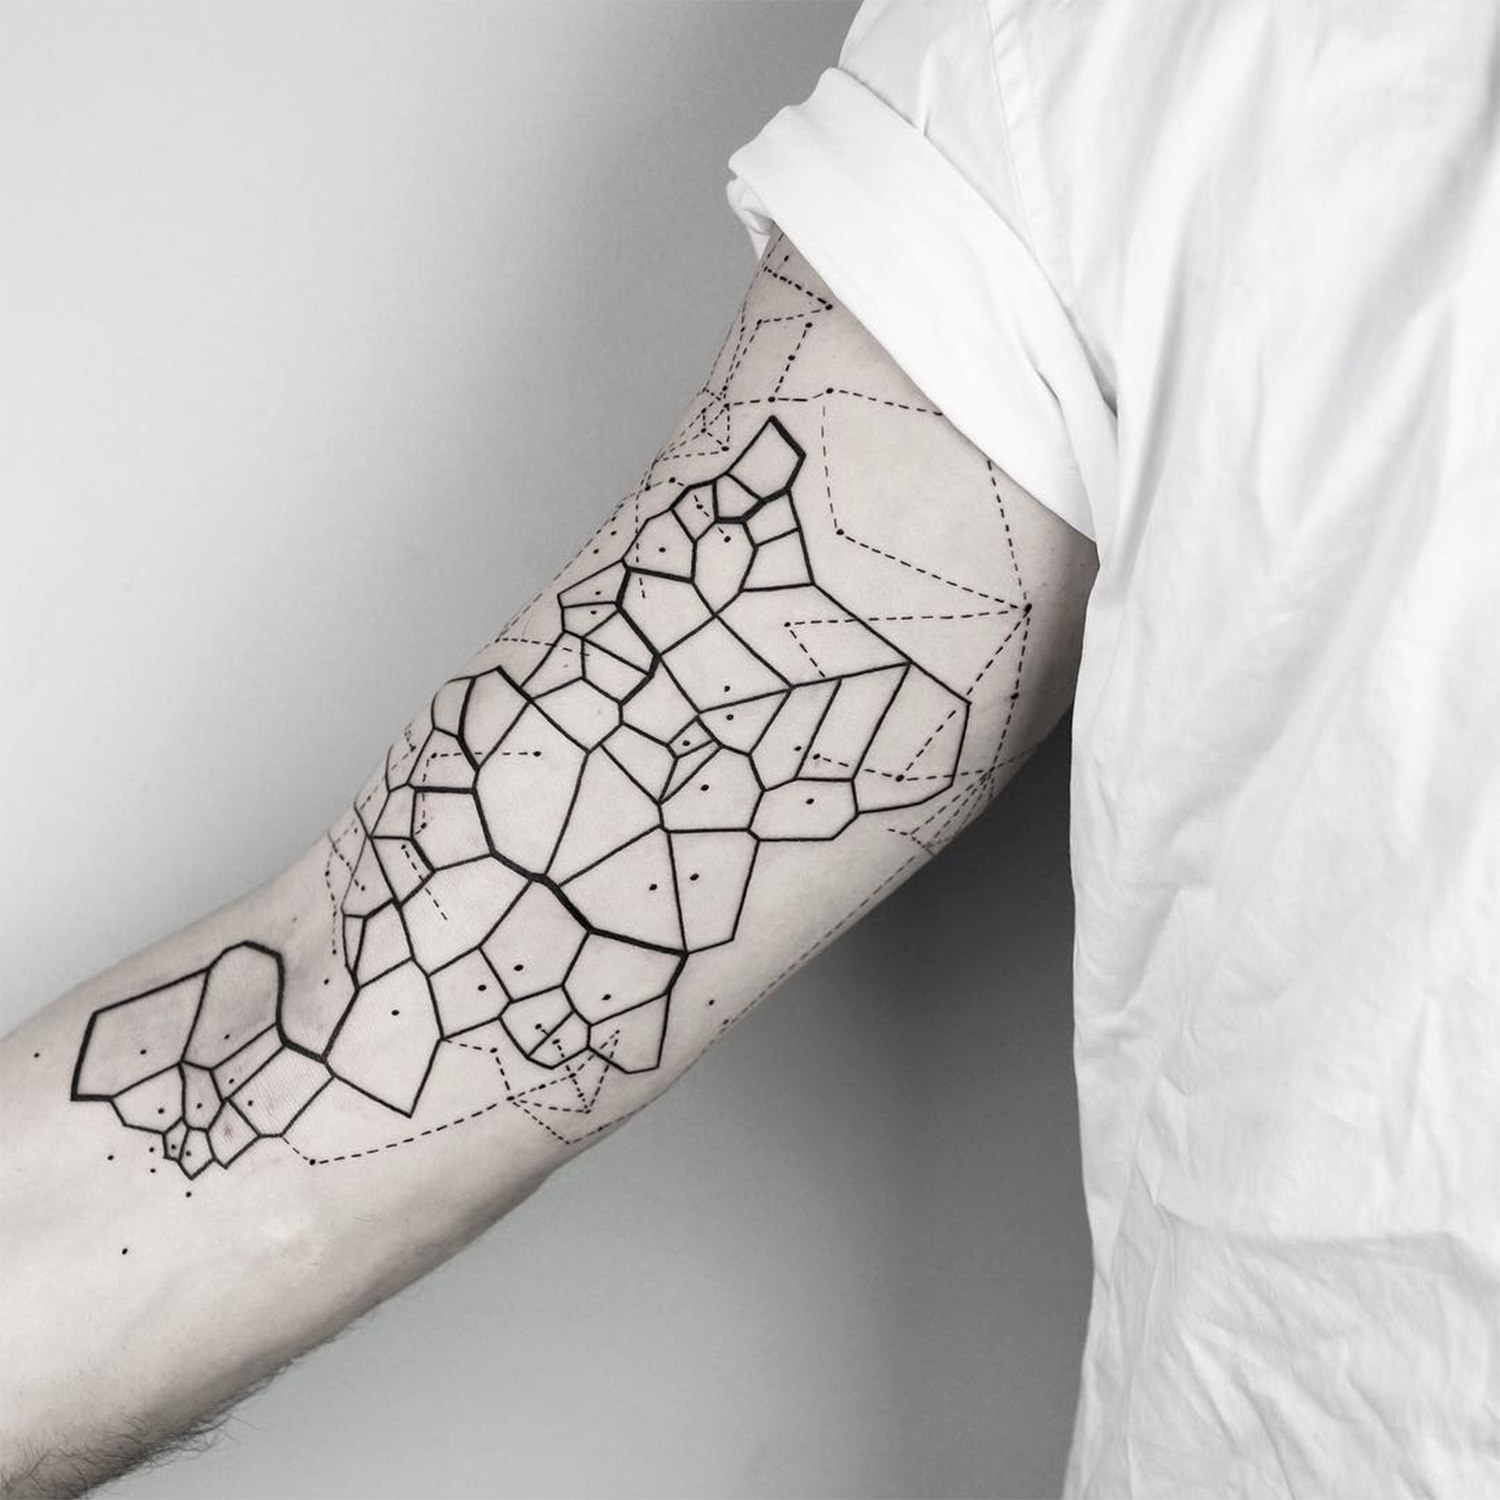 netted geometry, tattoo